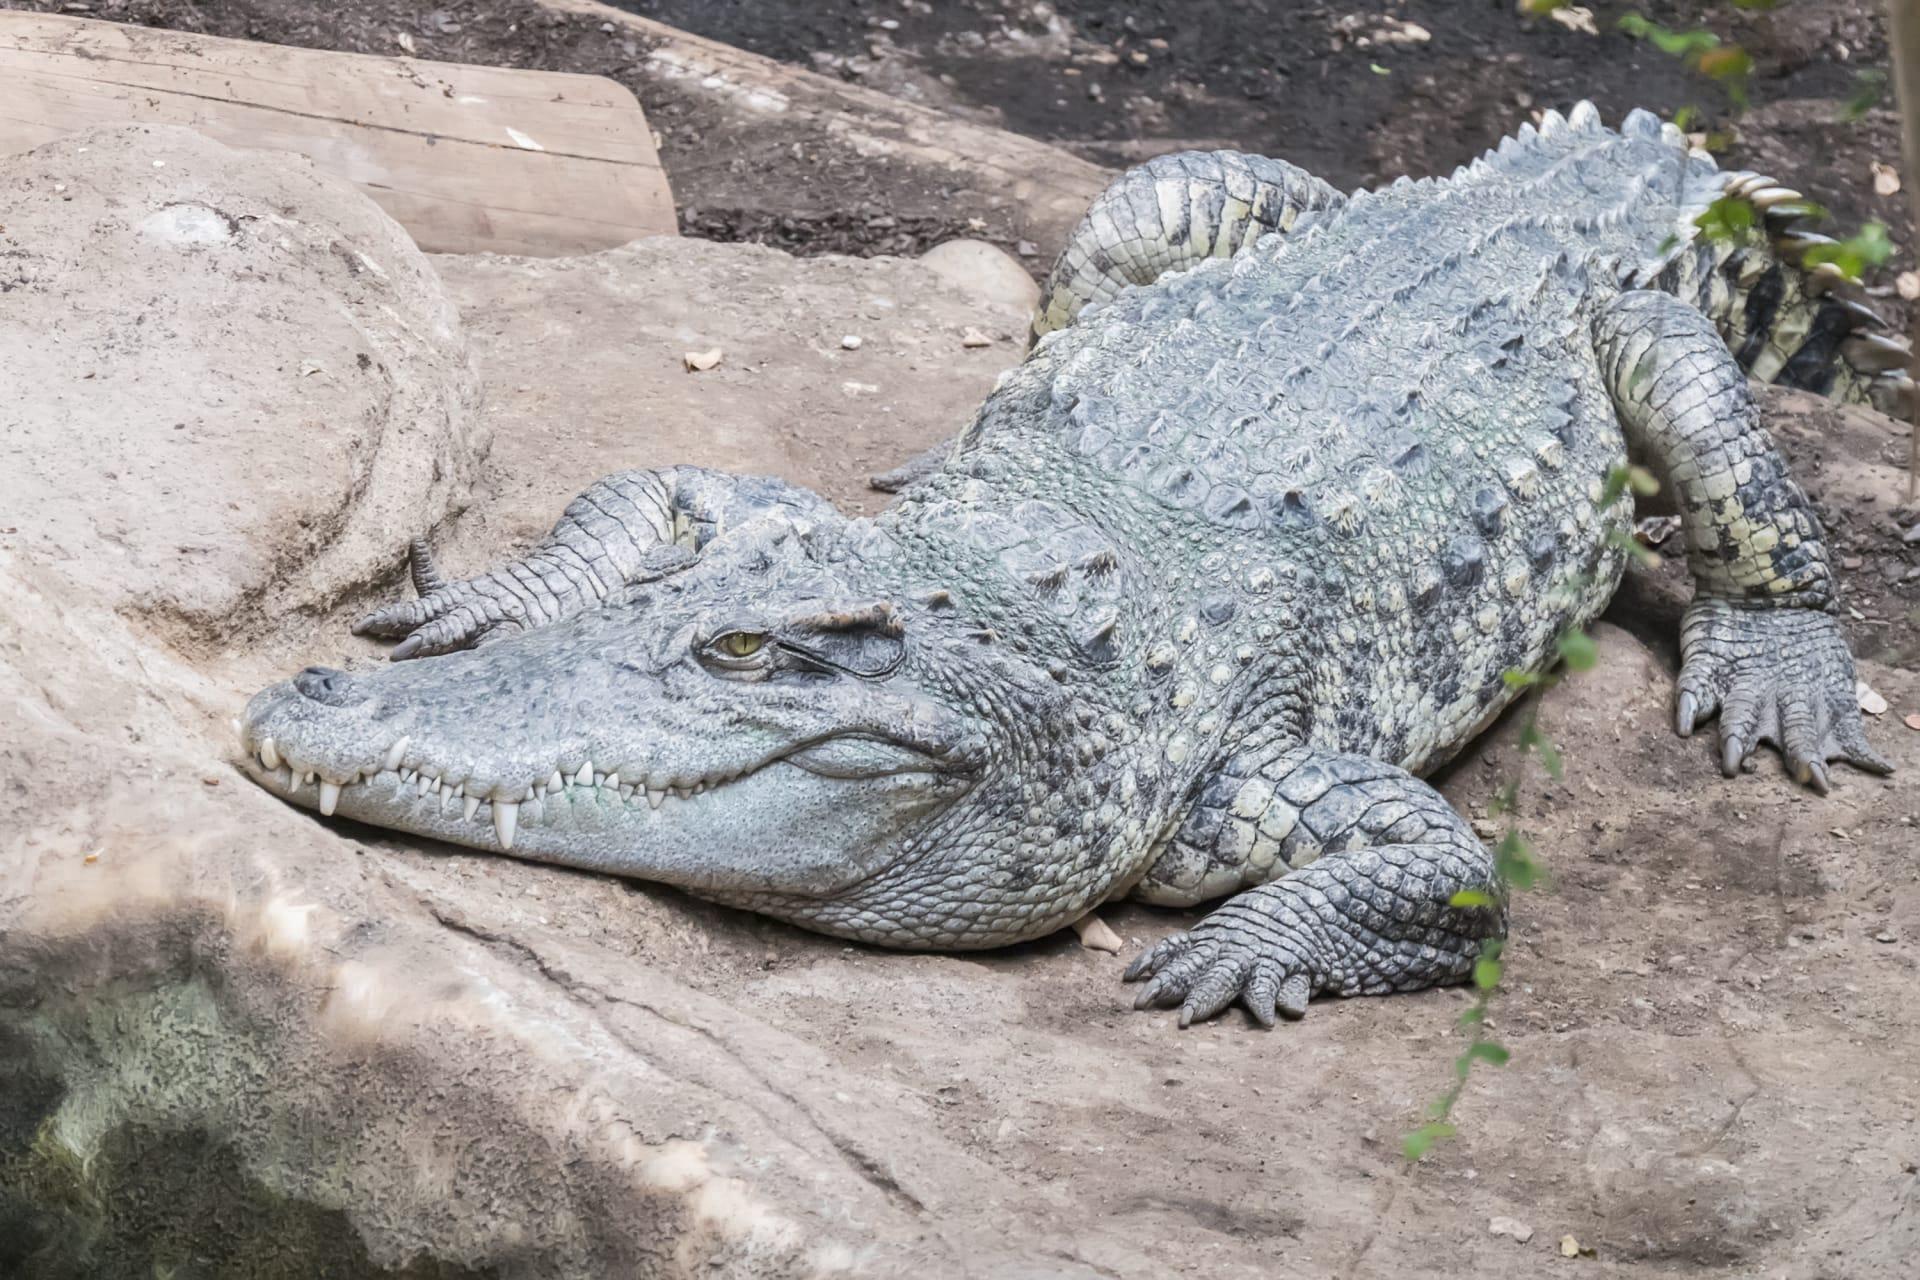 Dwarf crocodile pictures